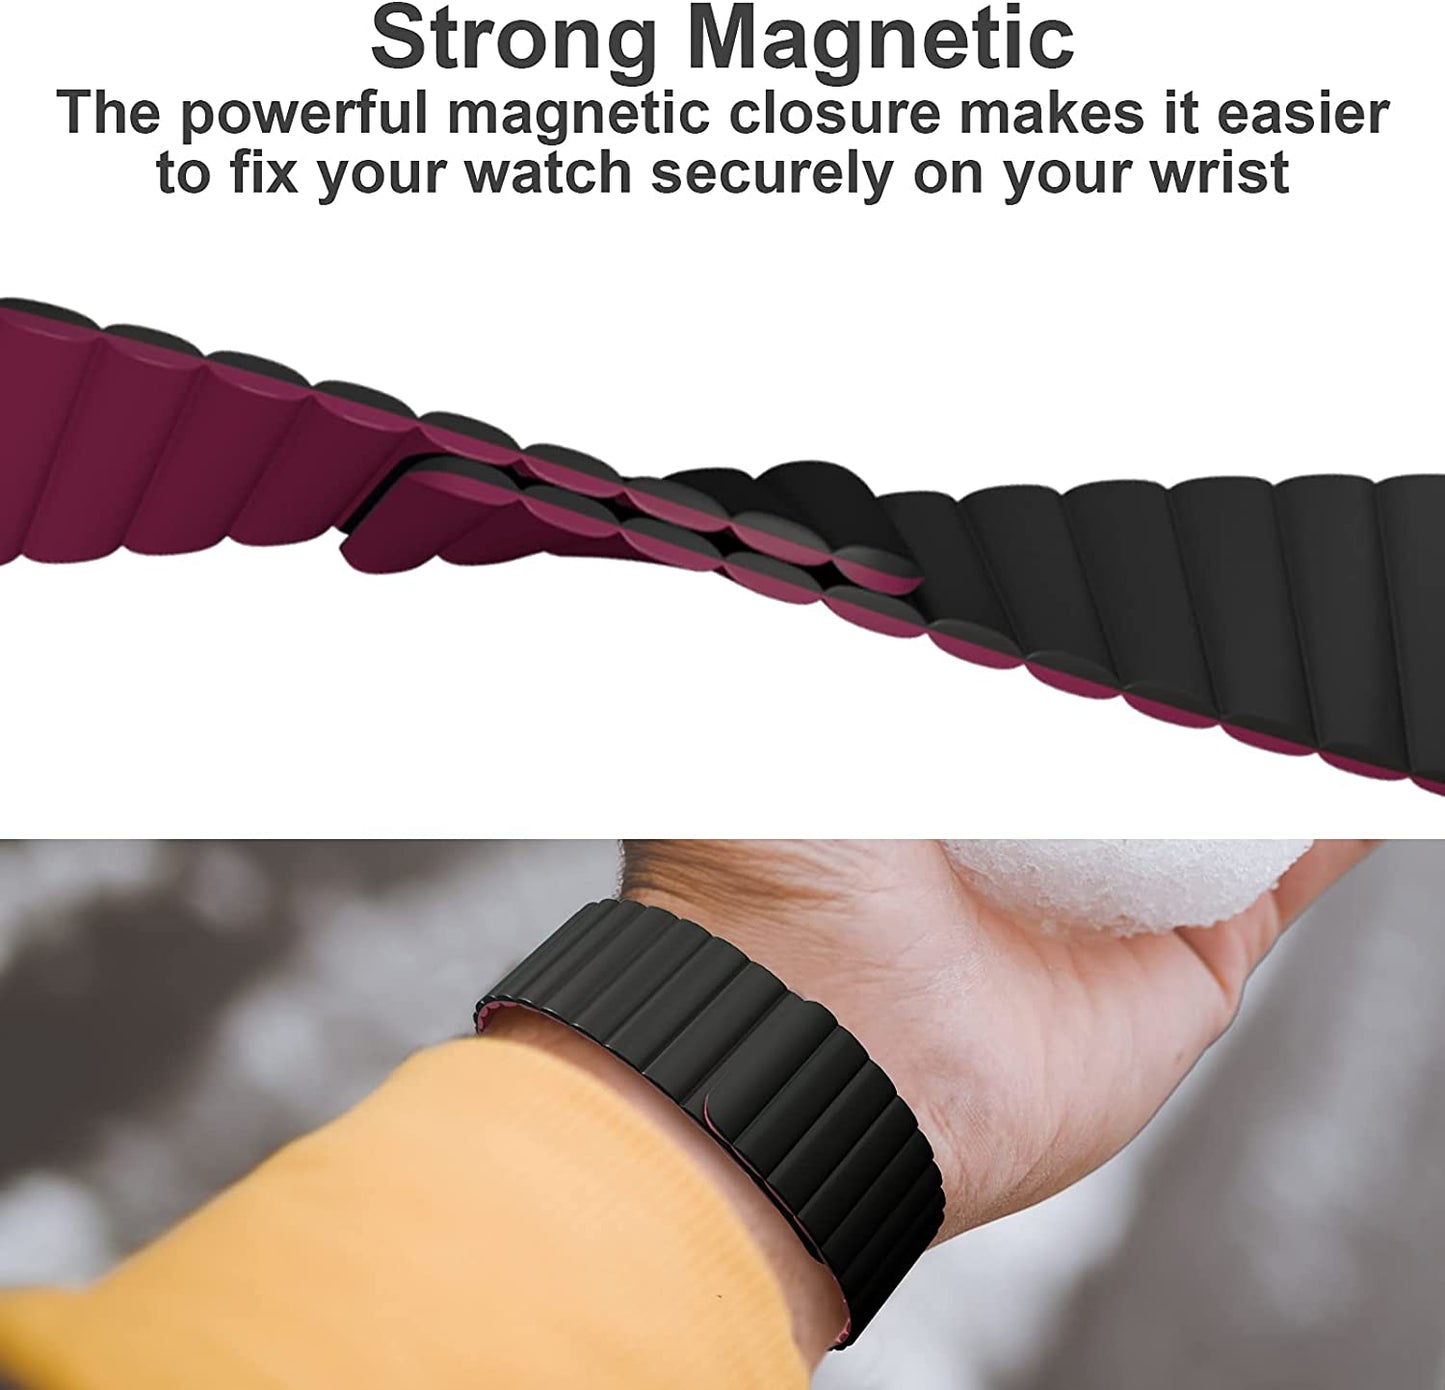 Bracelet Magnétique Smart Watch 22MM Band Sport